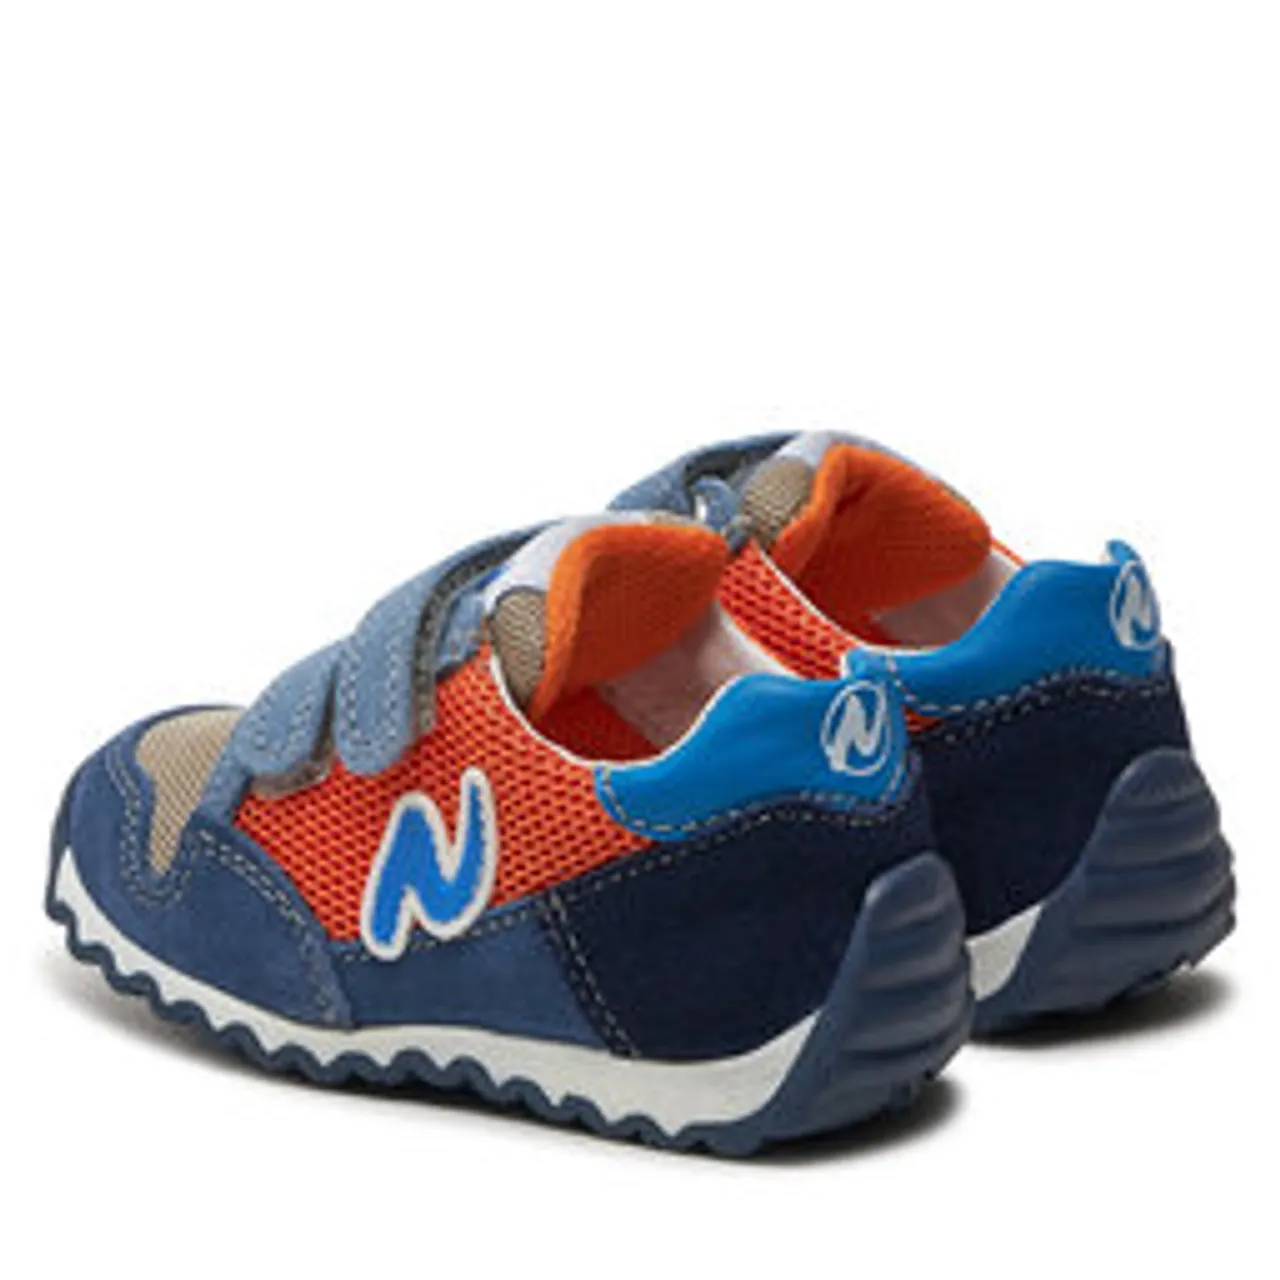 Sneakers Naturino Sammy 2 Vl. 2016558-01-1C65 Azzurro